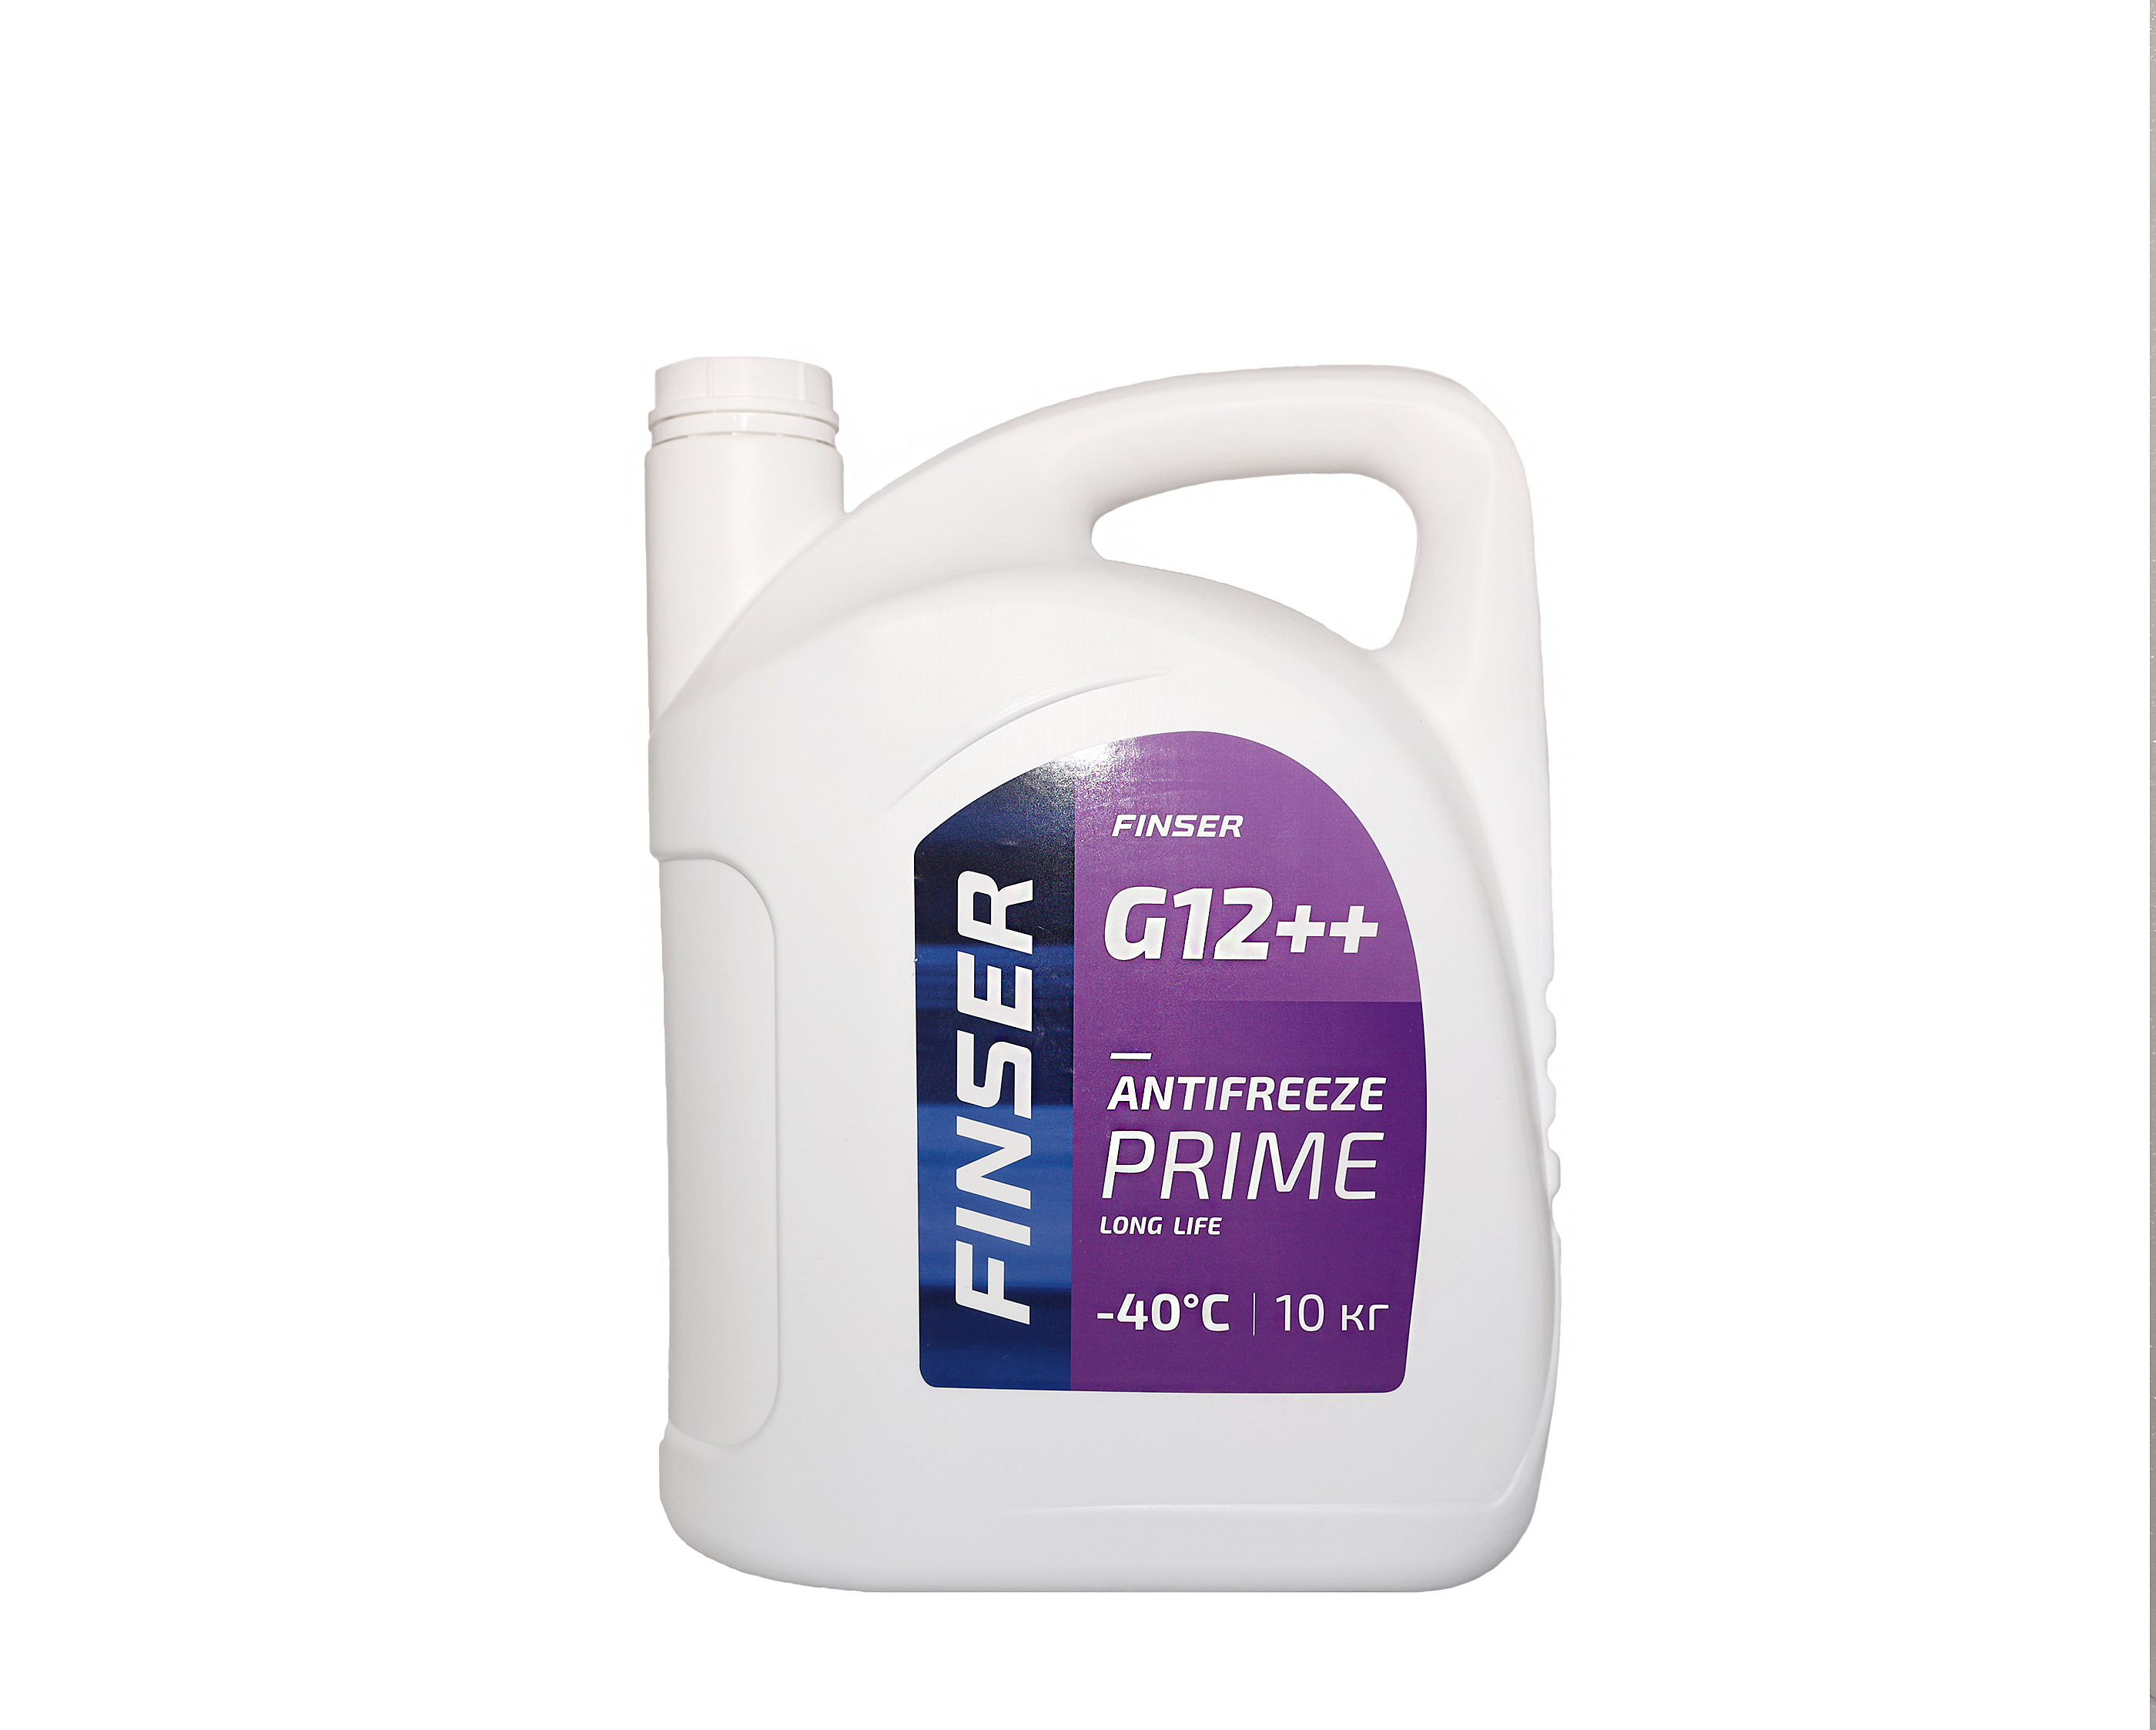 FINSER ANTIFREEZE PRIME  G12++ 10кг  (фиолетовый)